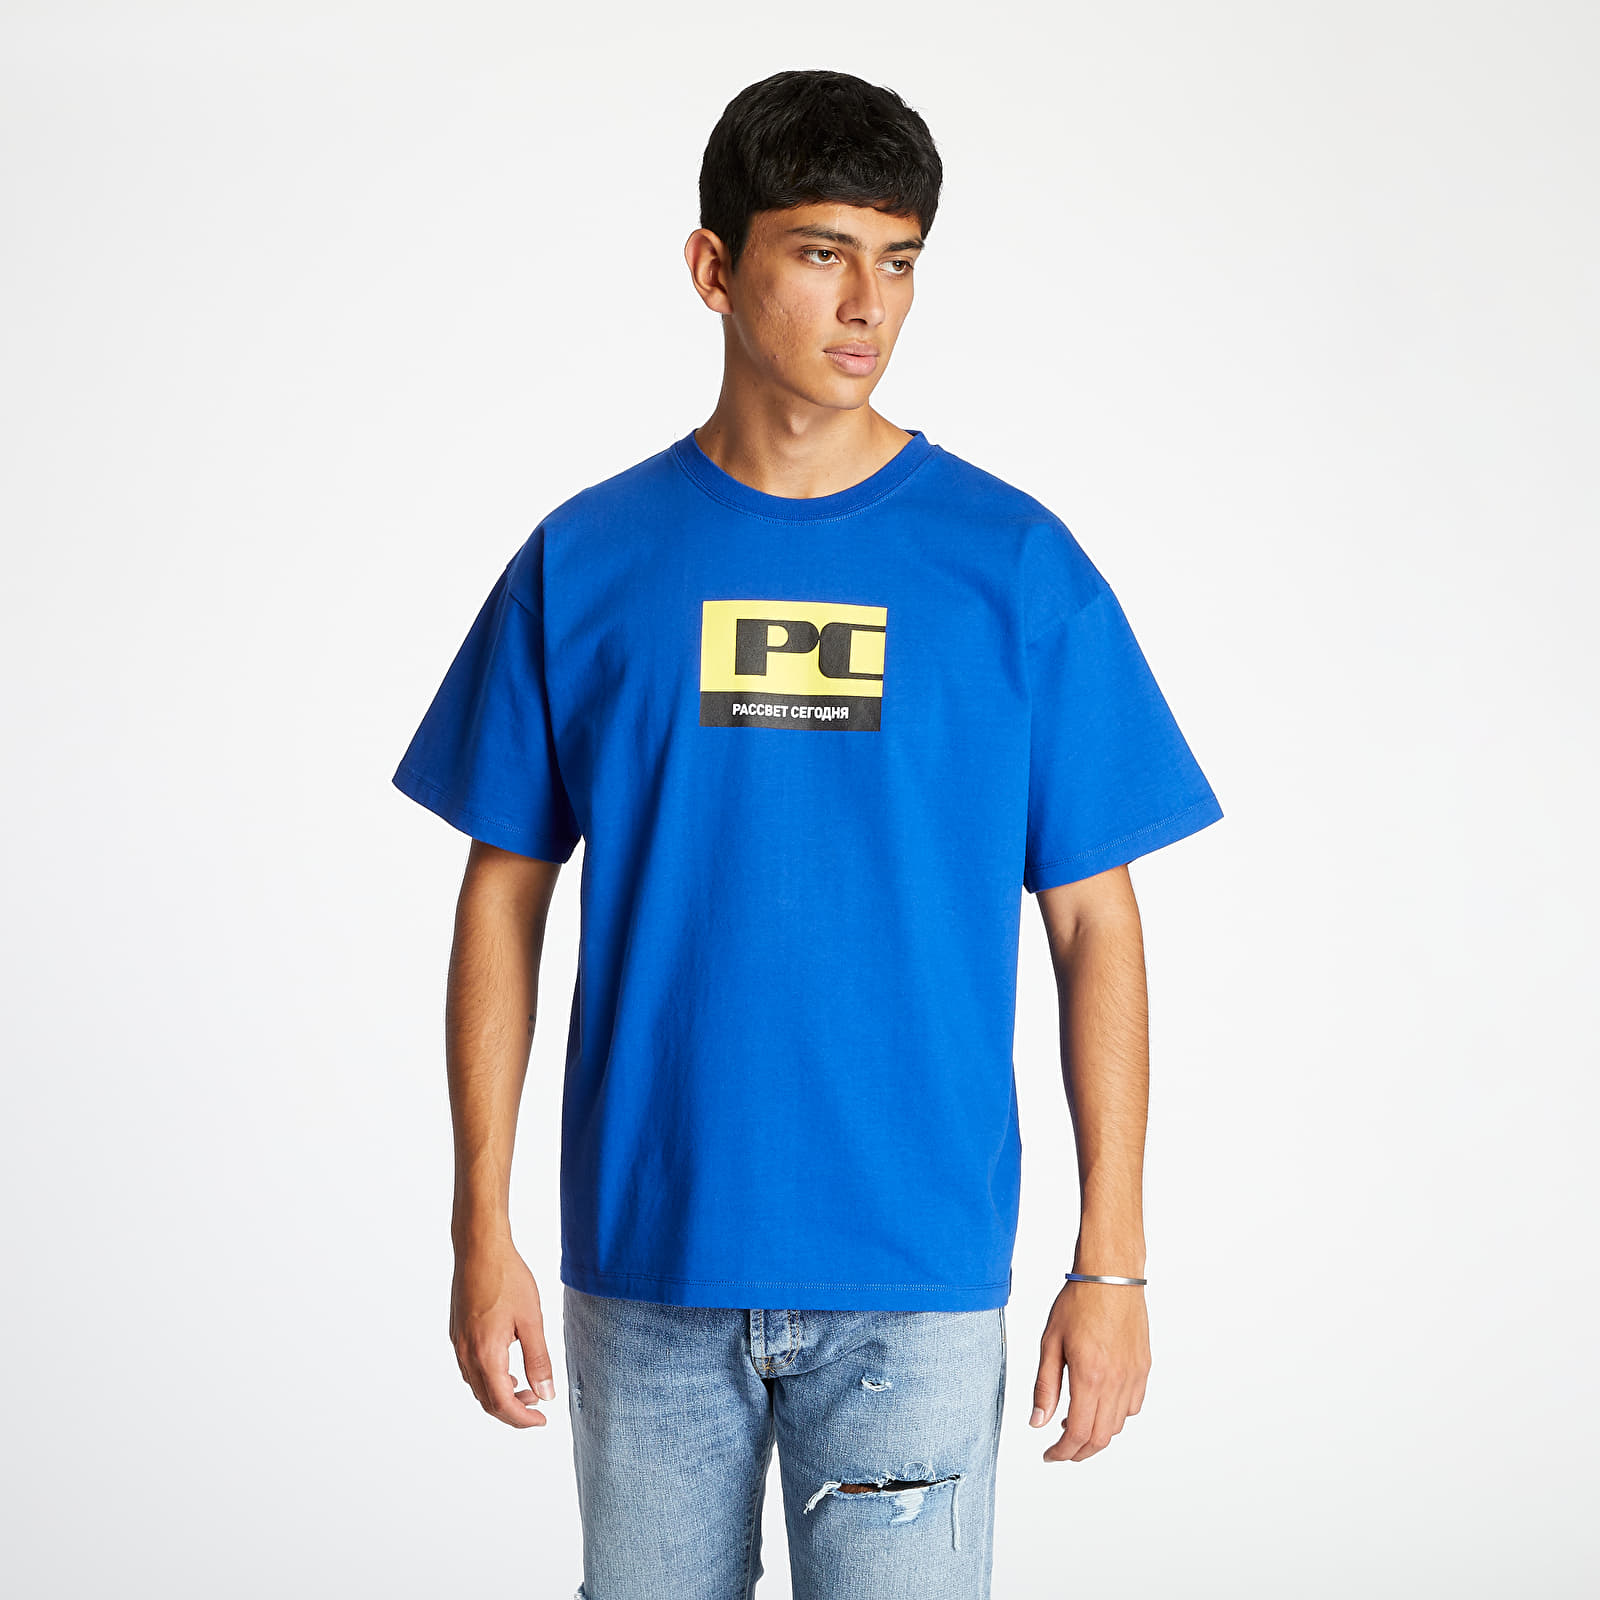 T-shirts PACCBET Tee Blue